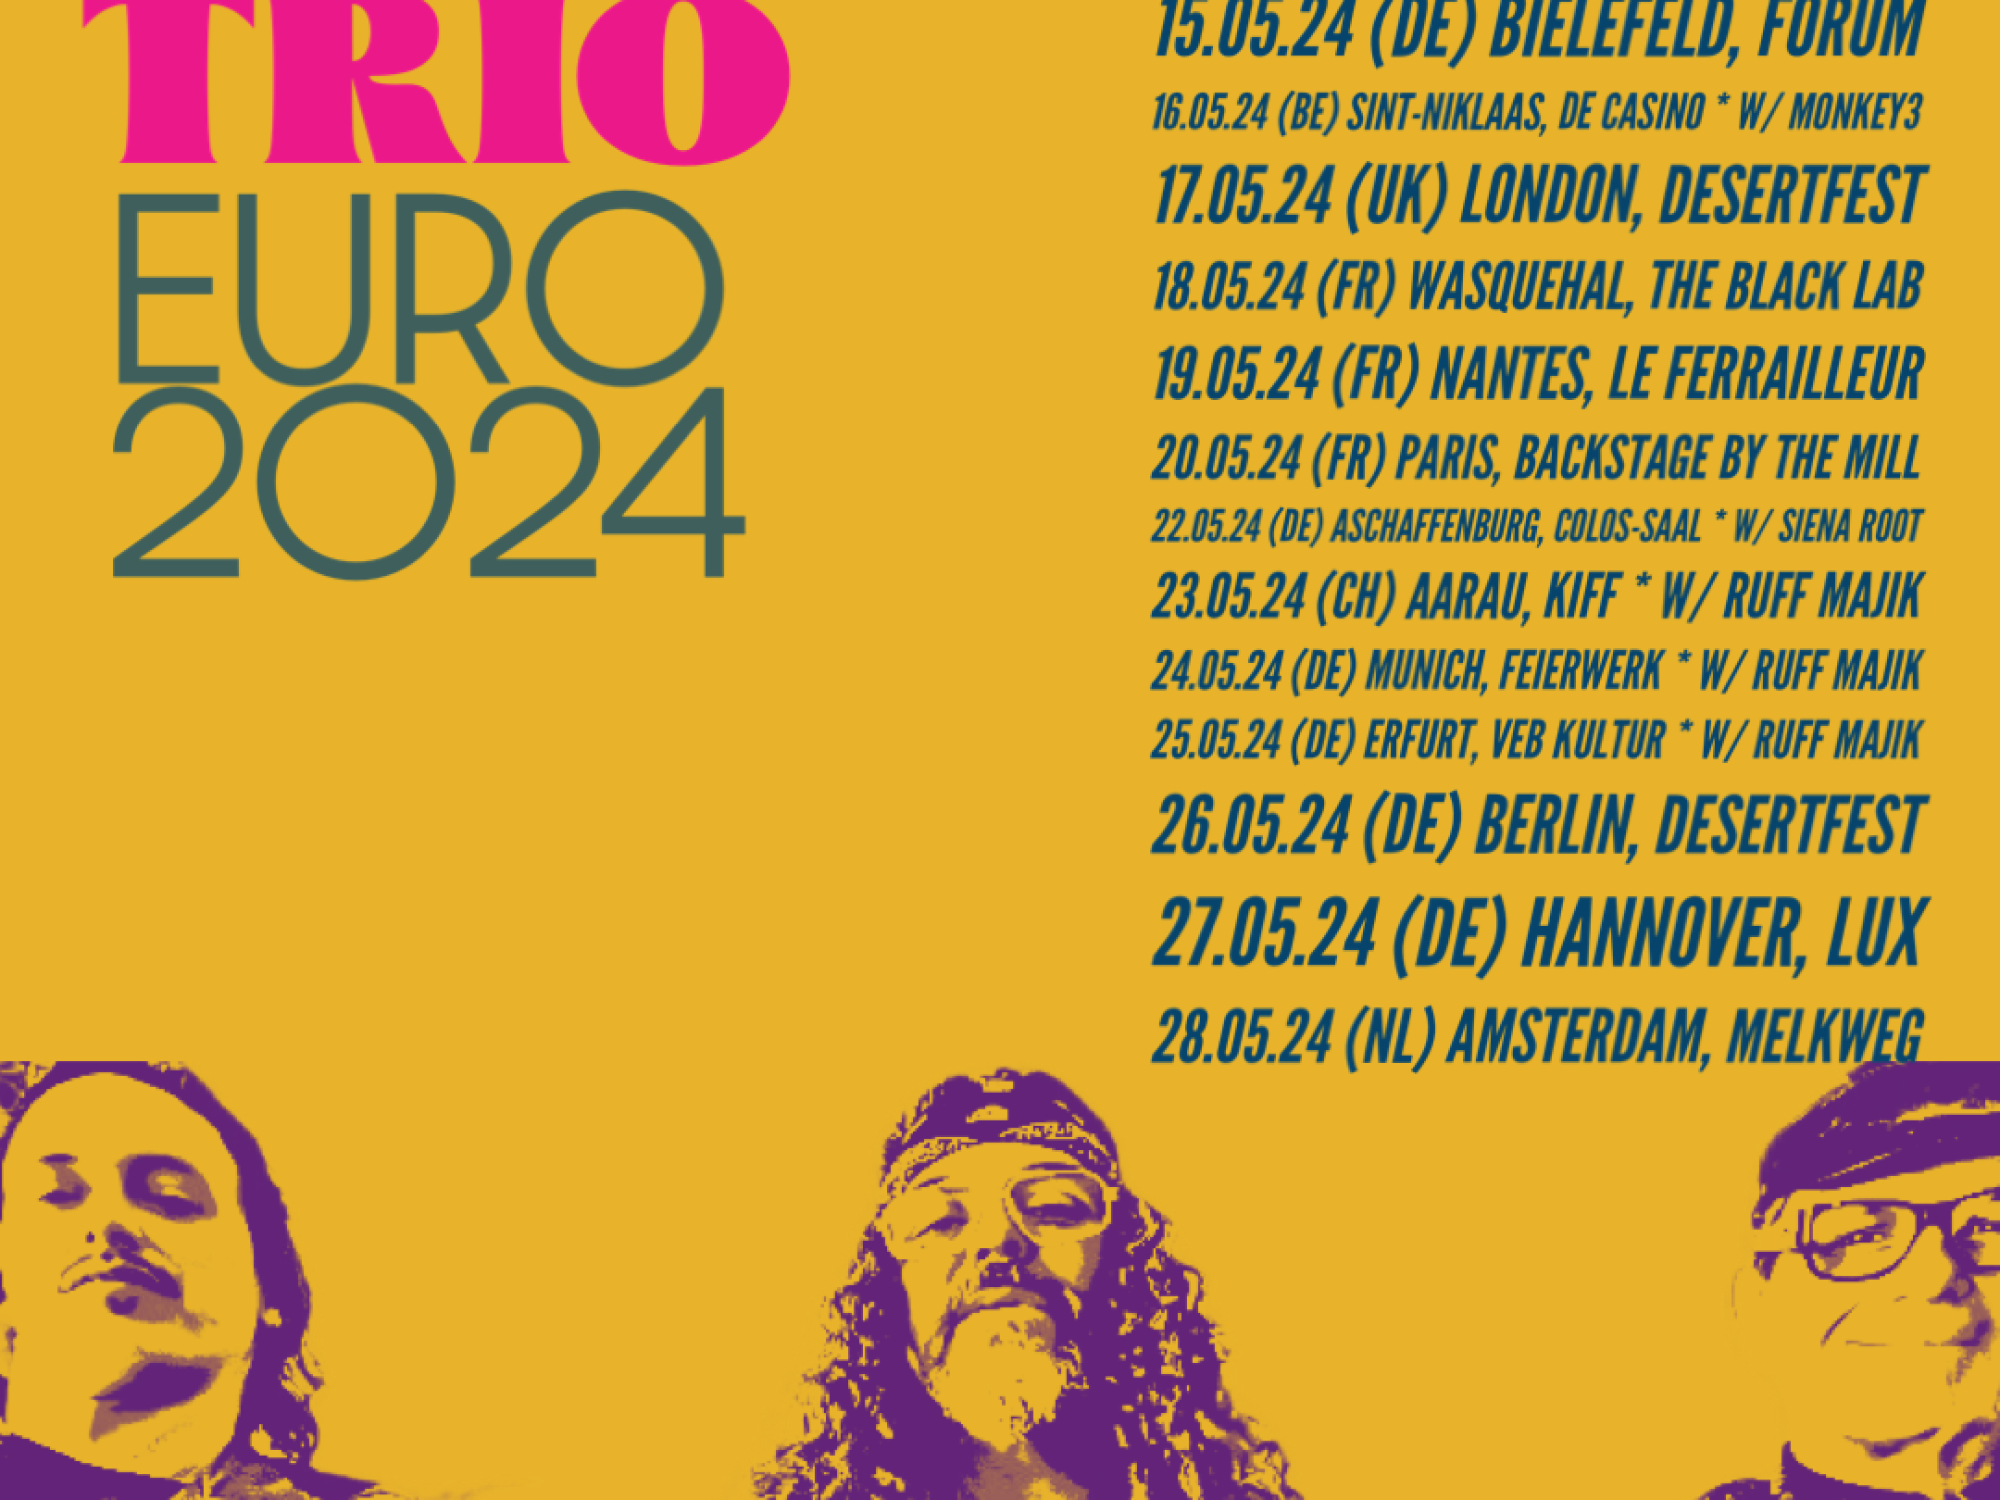 Brant Bjork Trio - Tour 2024 on Sound of Liberation Website